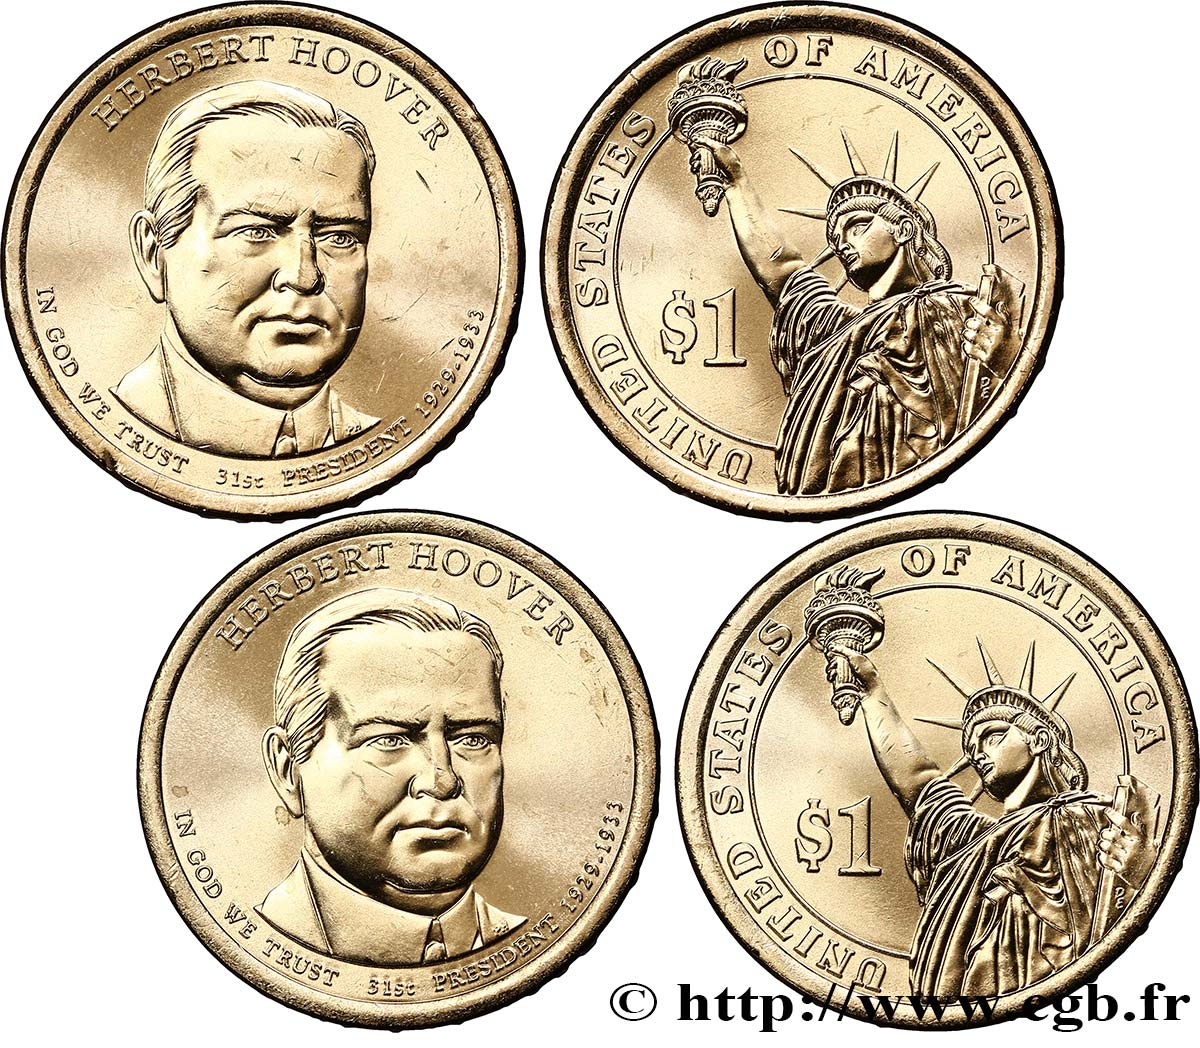 VEREINIGTE STAATEN VON AMERIKA Lot de deux monnaies 1 Dollar Herbert Hoover 2014 Denver ST 